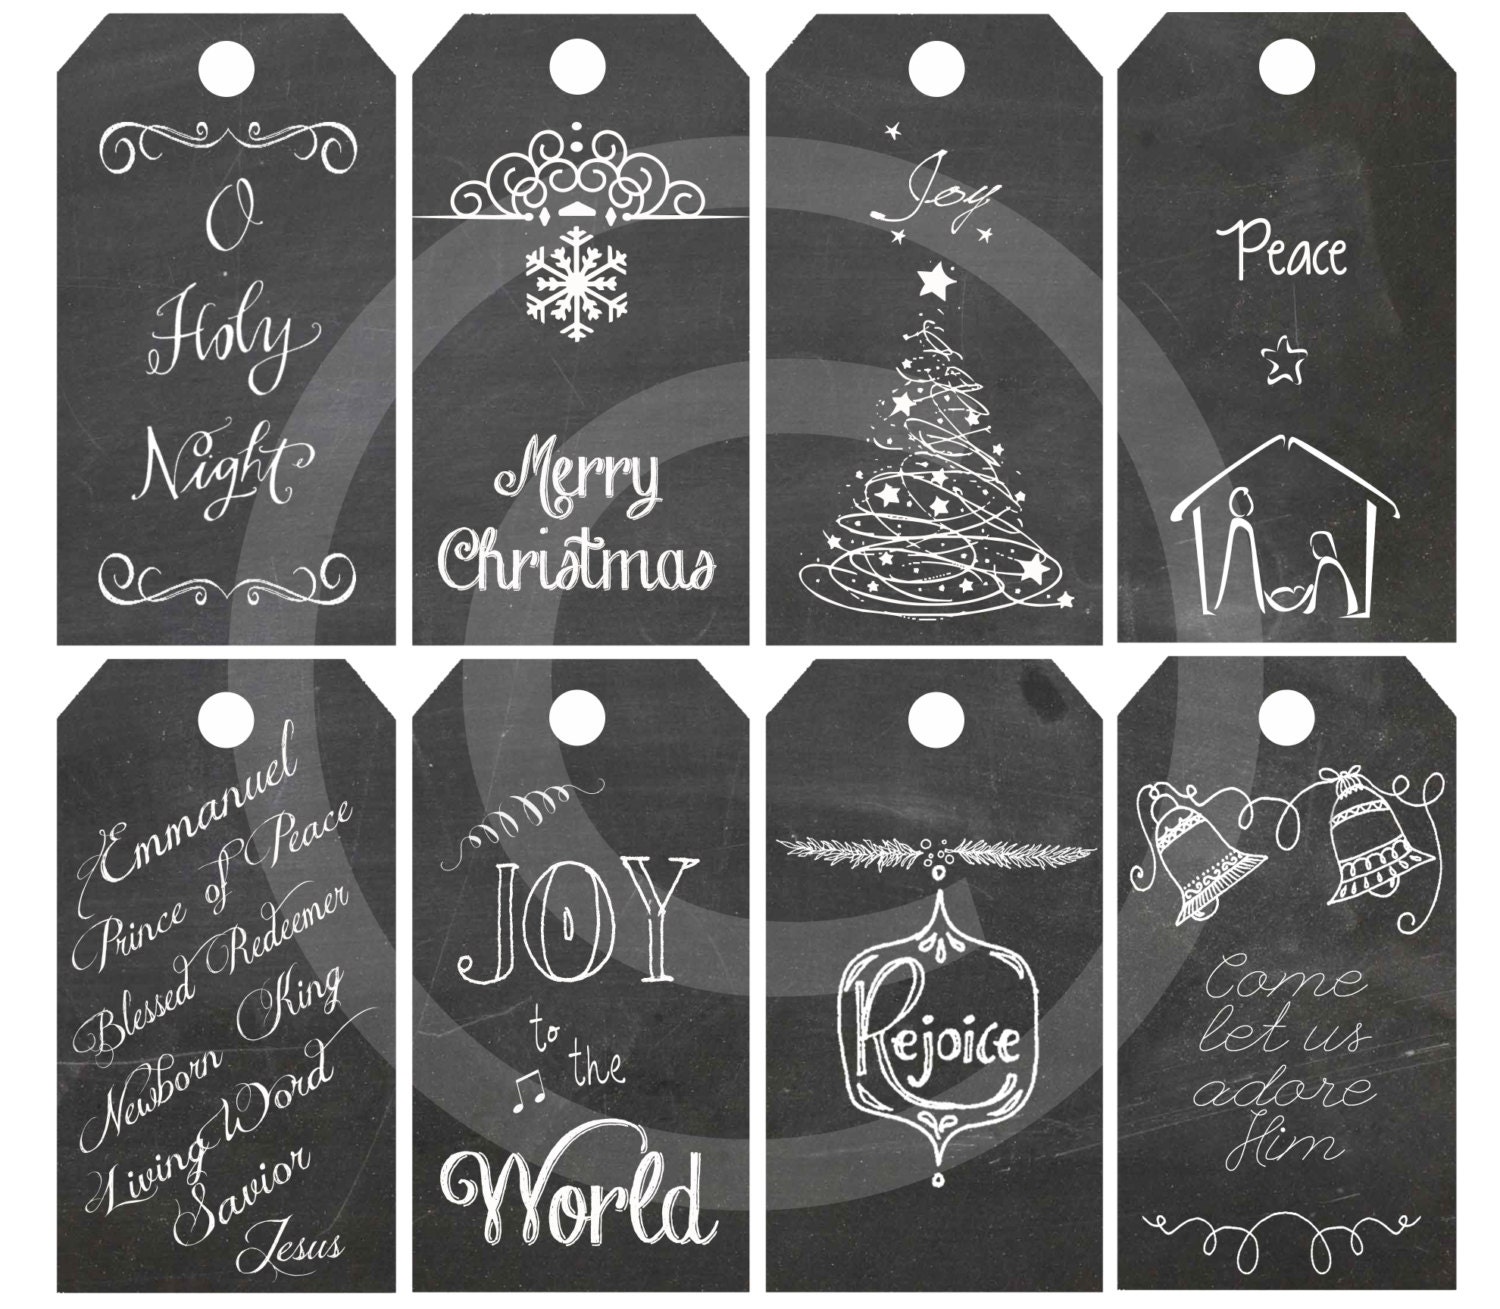 16 Free Printable Christmas Gift Tags That Point to Jesus - Peaches & Prayer